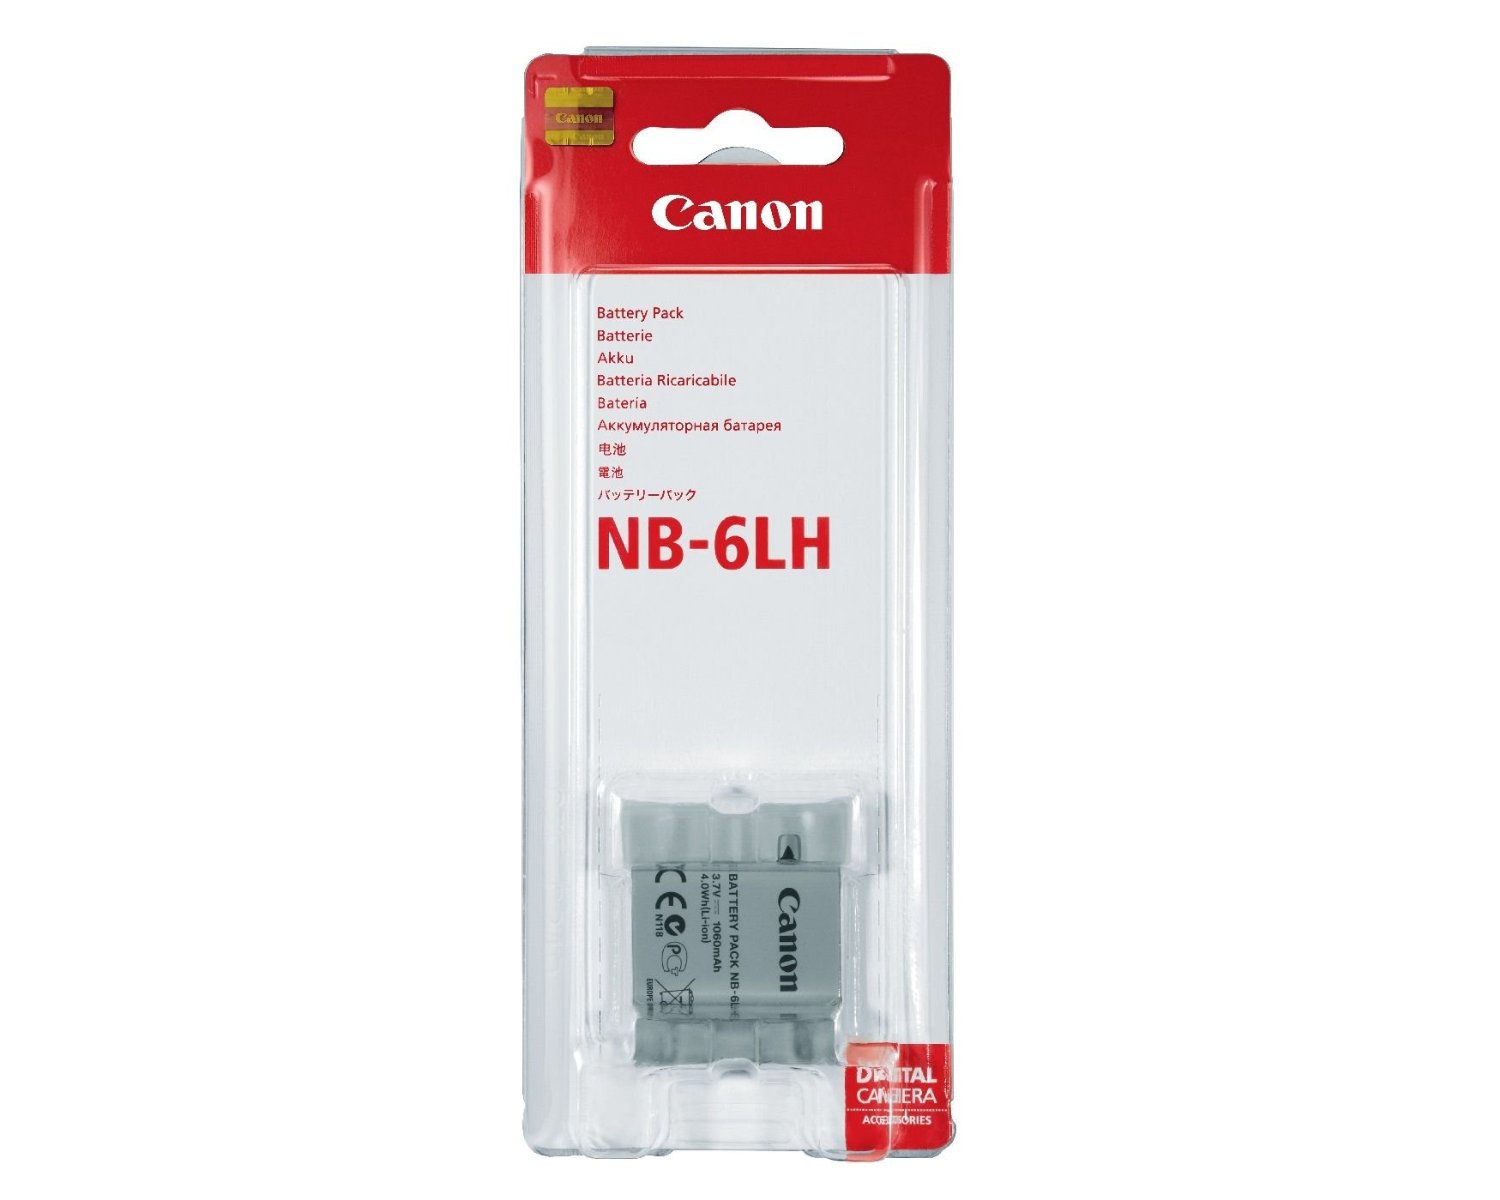 Canon batterie Pack NB-6LH